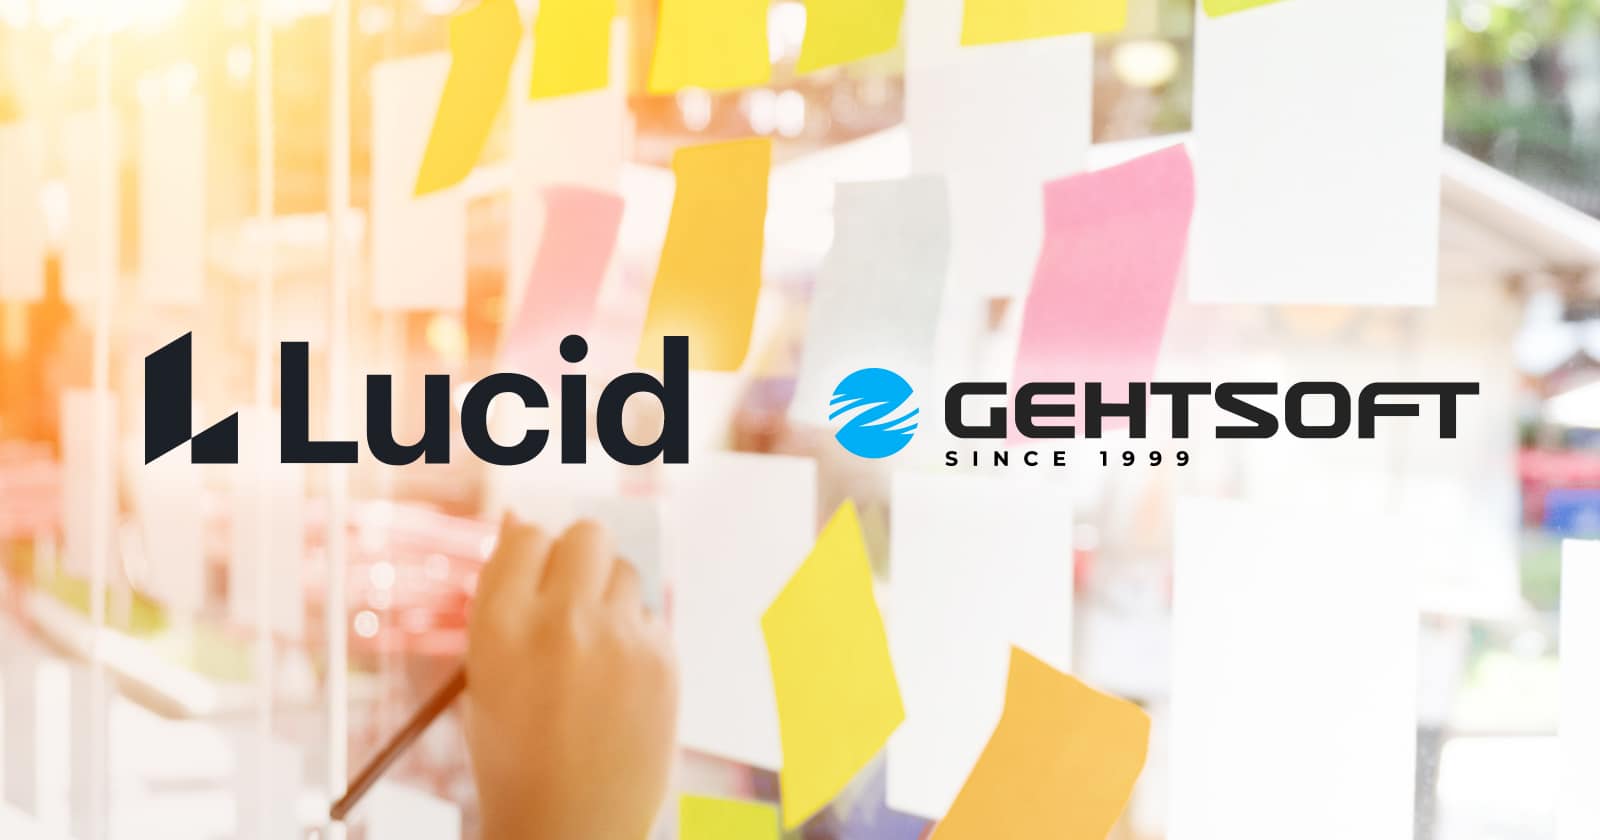 Lucid and Gehtsoft logos for Annual Partner Program